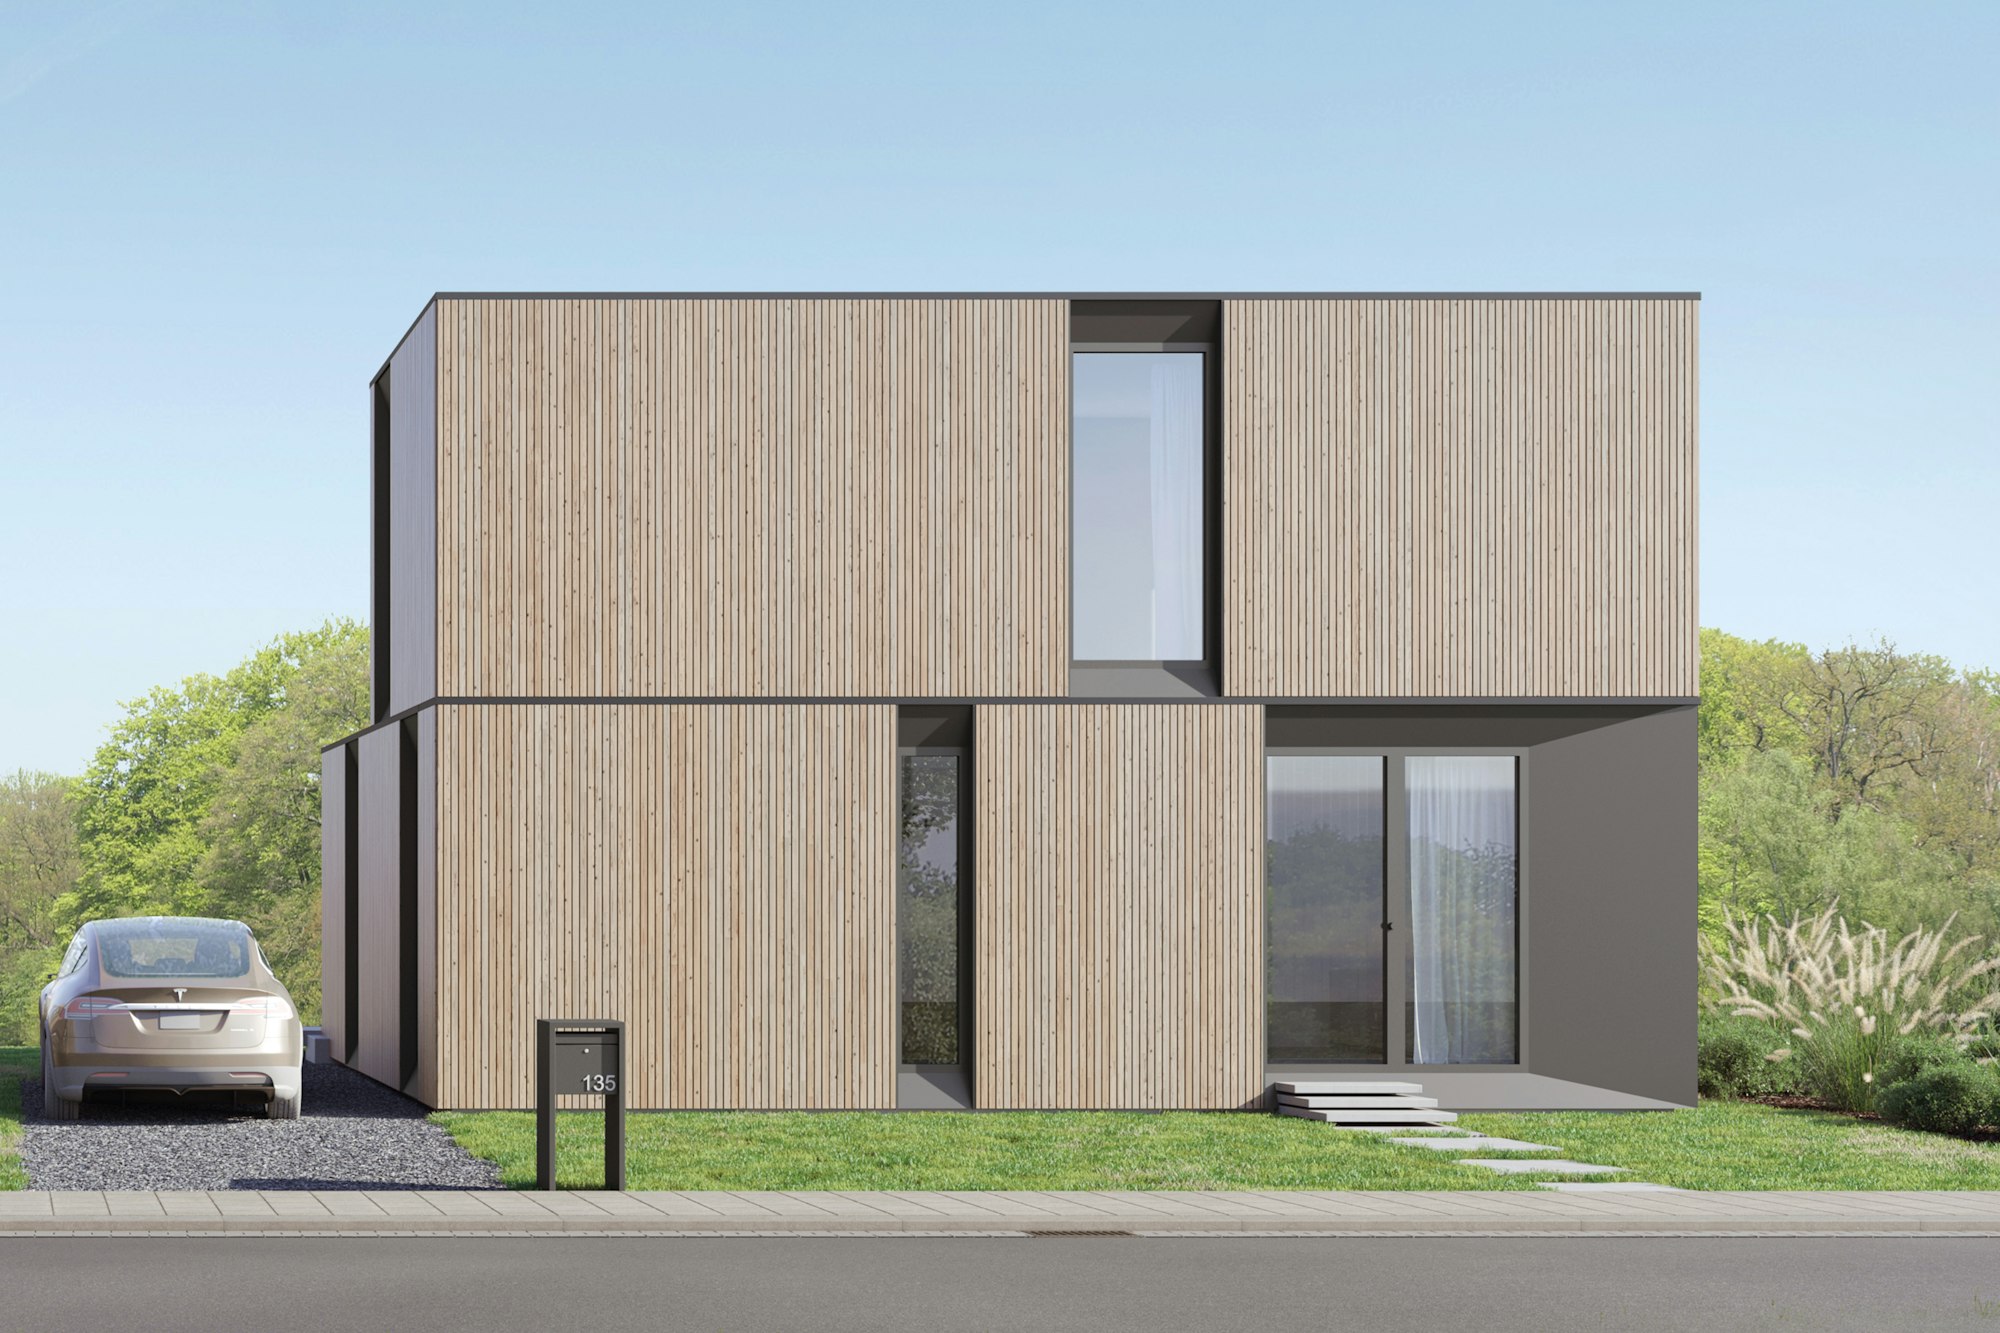 Skilpod #135 — houtskeletbouw woning met 3 slaapkamers, modern design met naturel hout